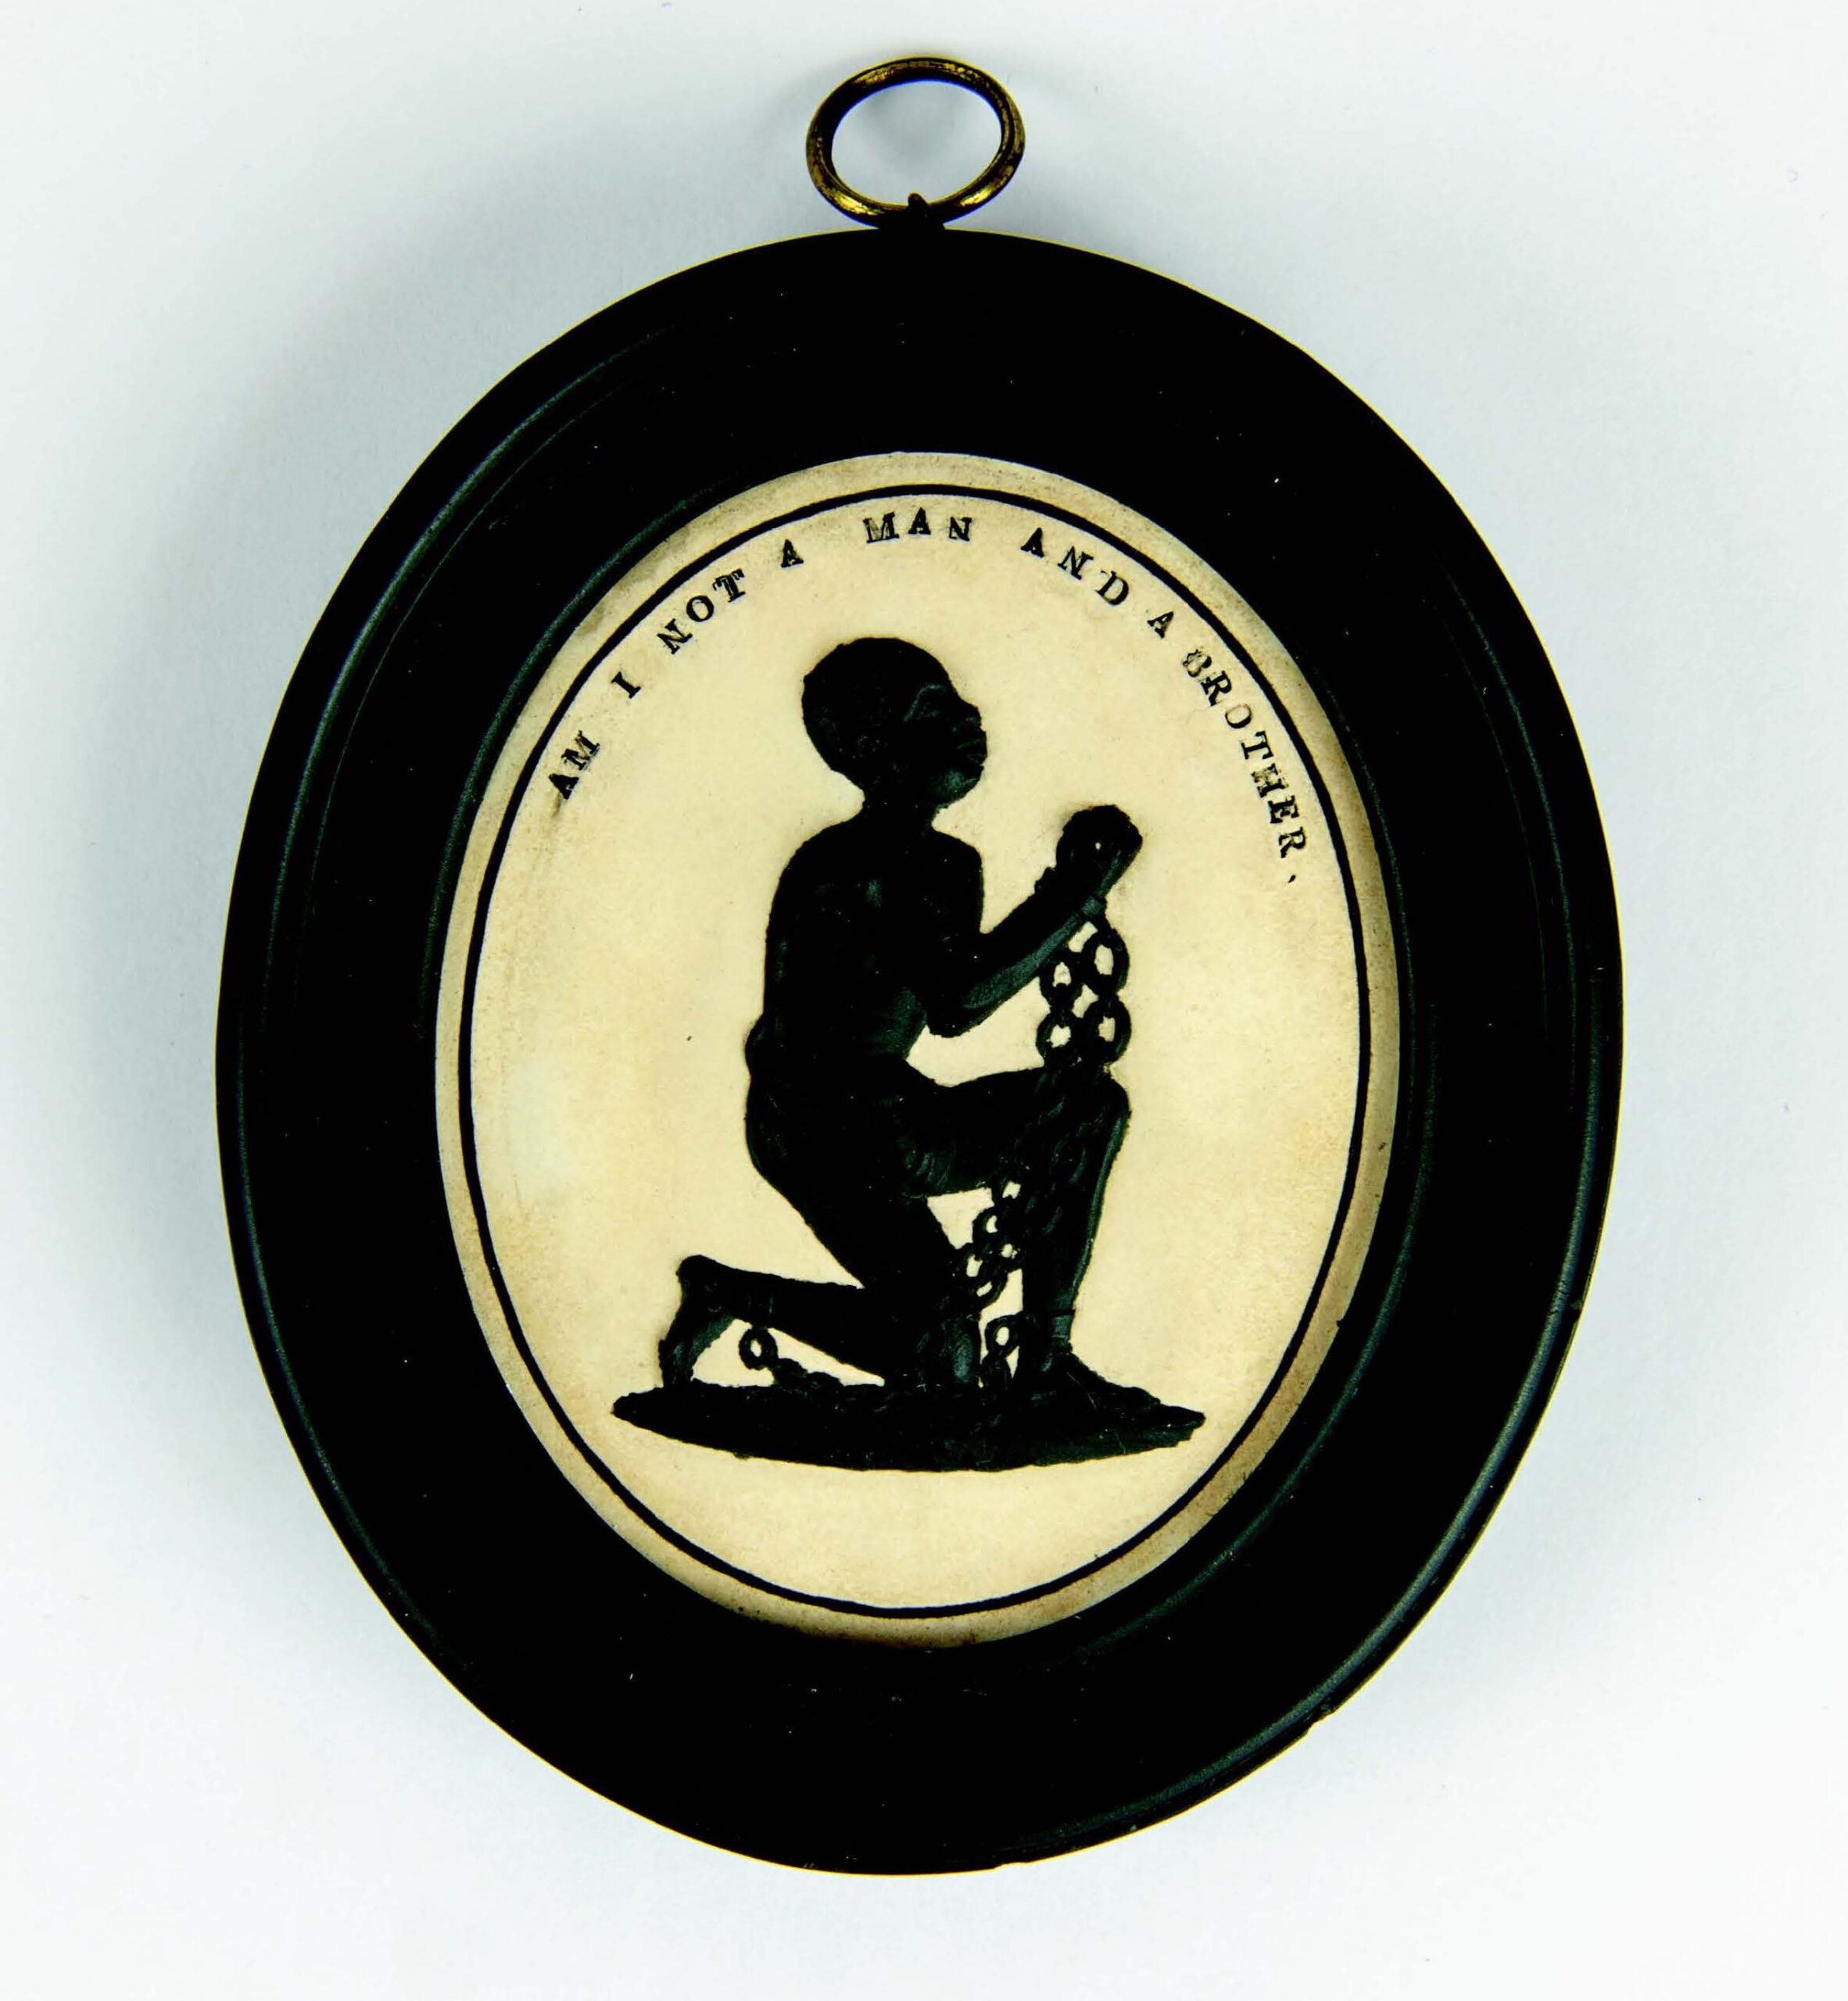 Josiah Wedgwood abolitionist medallion